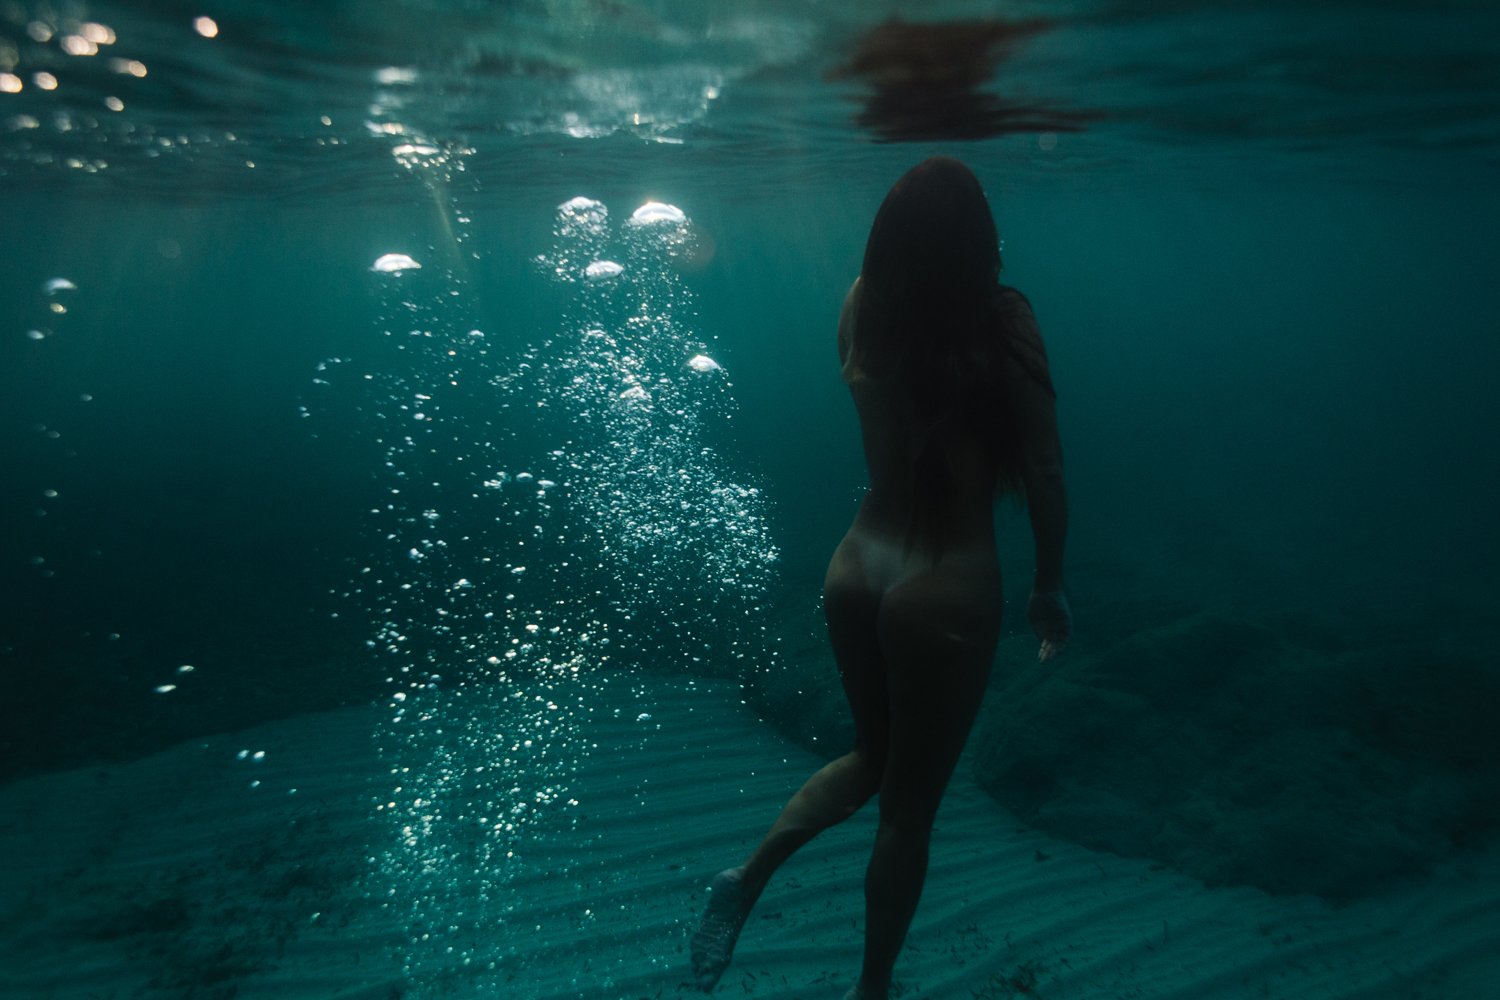 siren sirens corse corsica underwater photography photographe sous leau mermaid femme woman women nude nue fine art photography Krista Espino ajaccio sea Mediterranean france travel-40.jpg